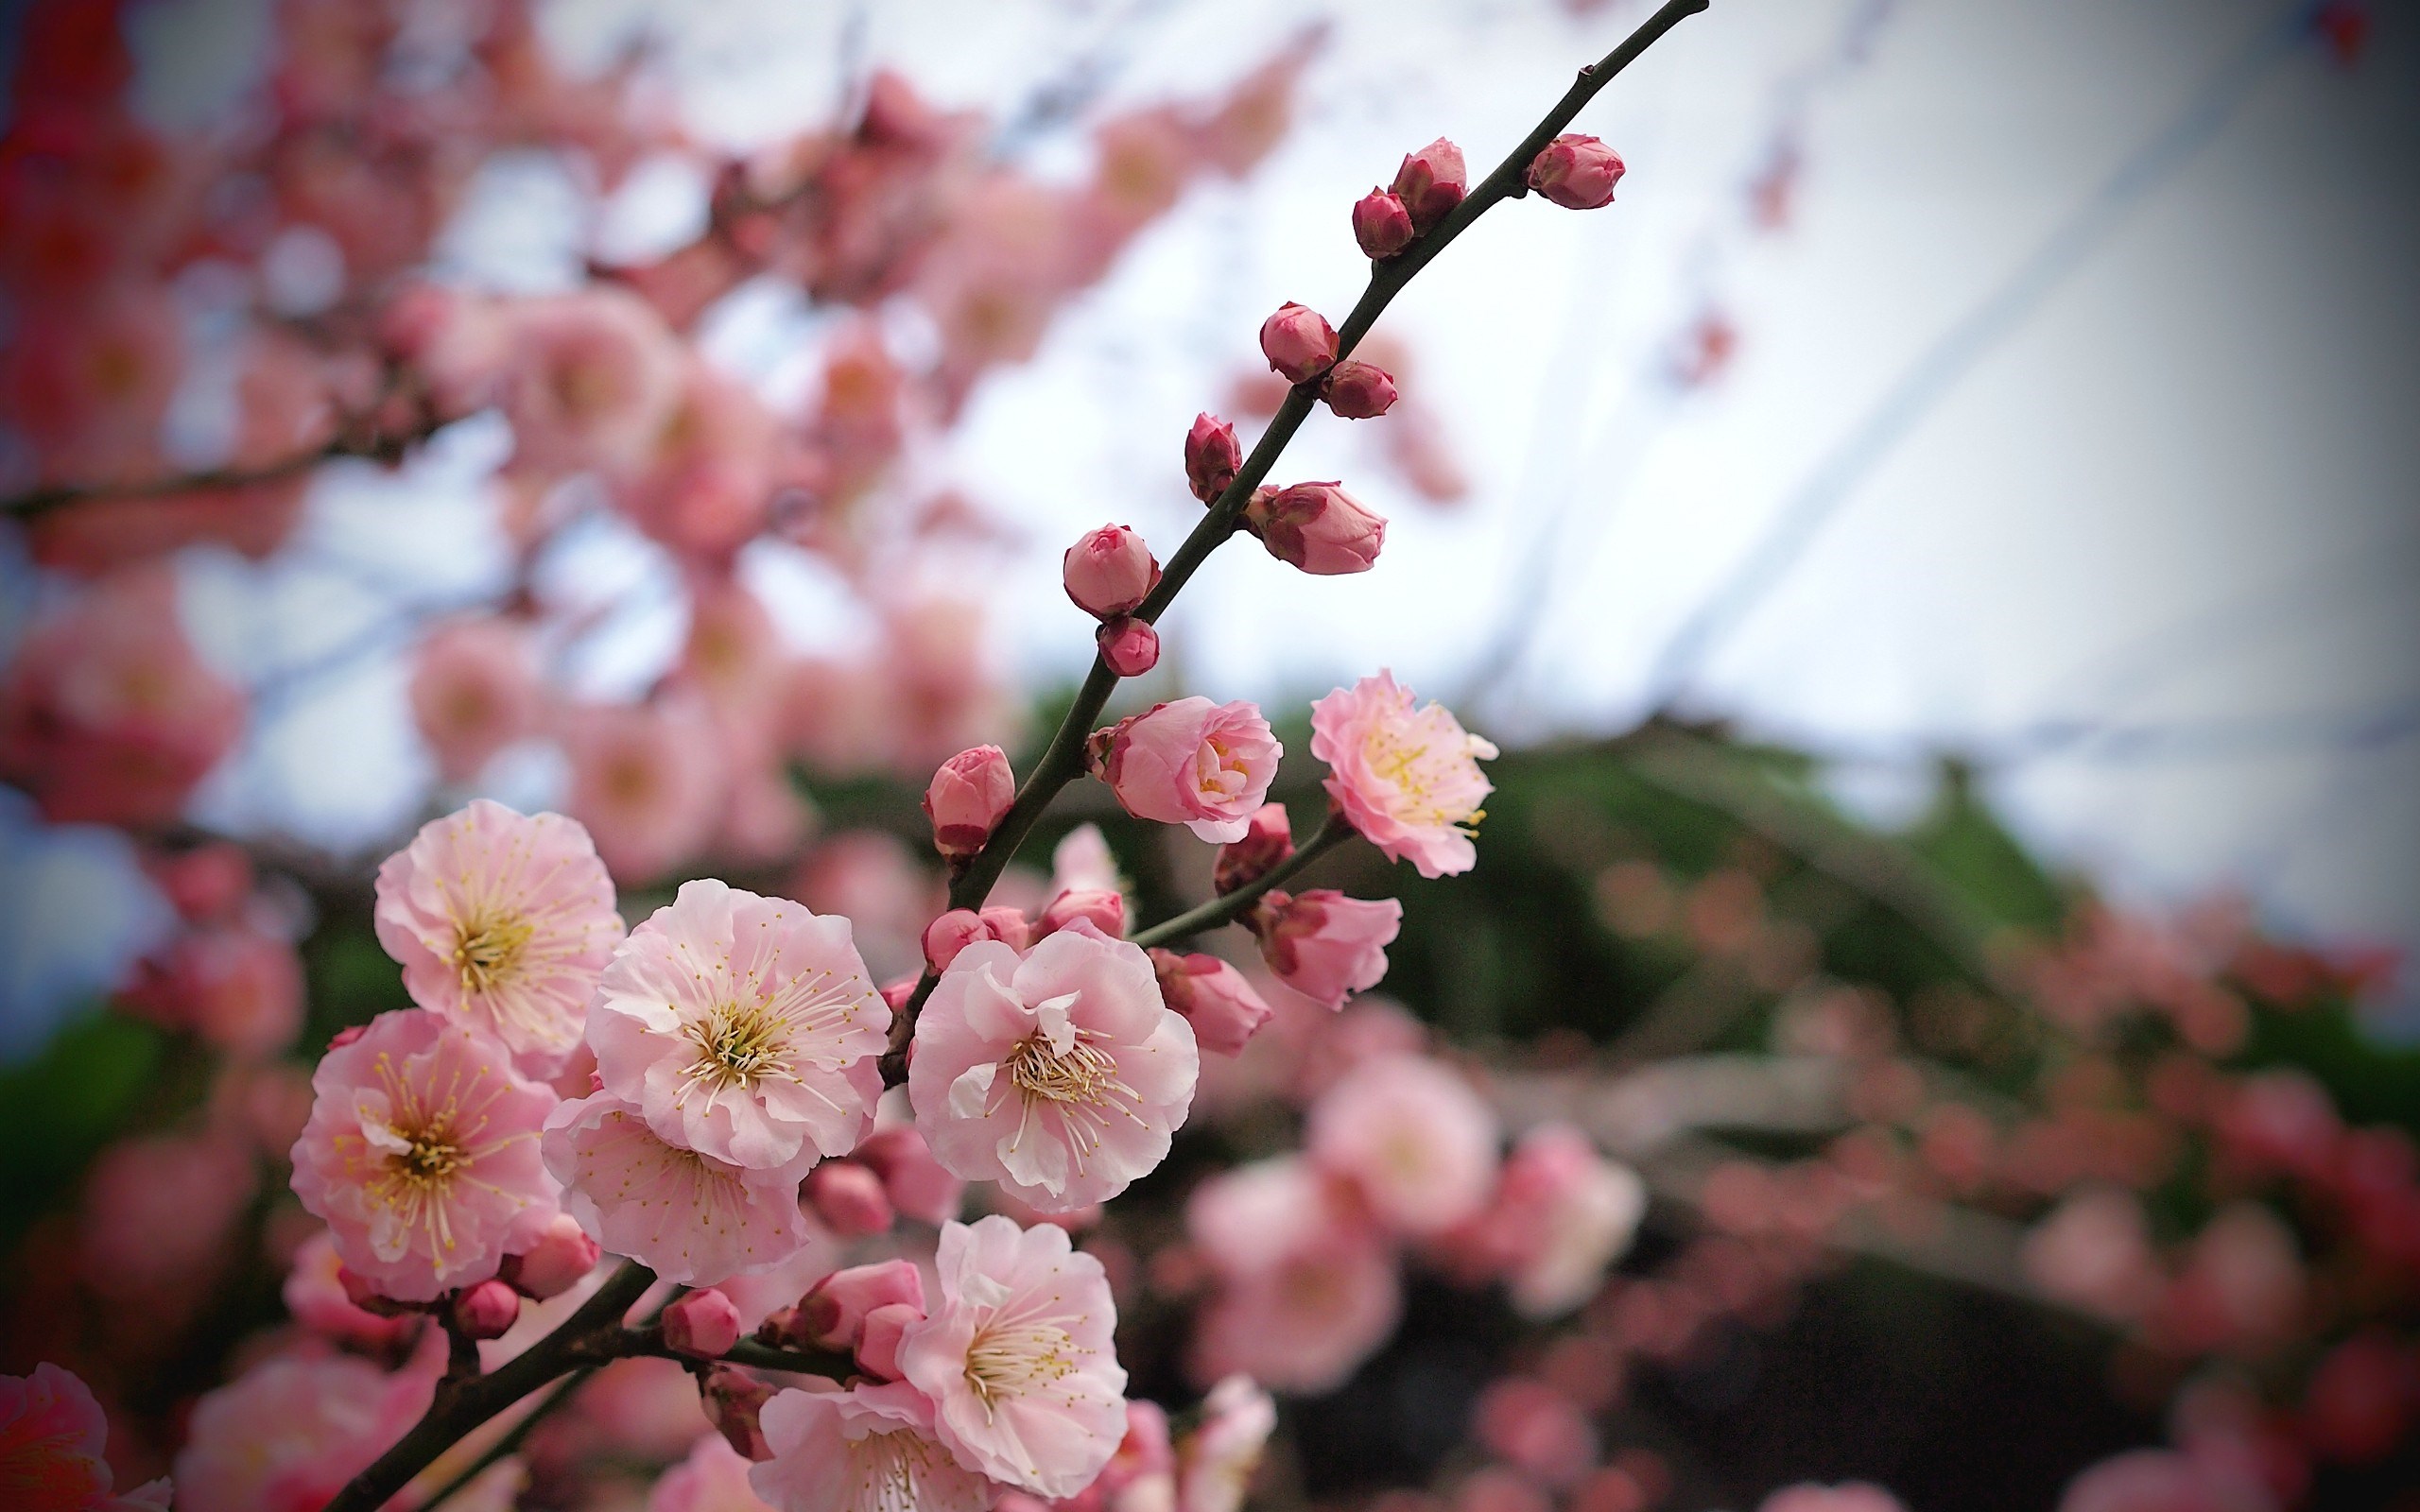 Spring Blossom - Wallpaper, High Definition, High Quality, Widescreen